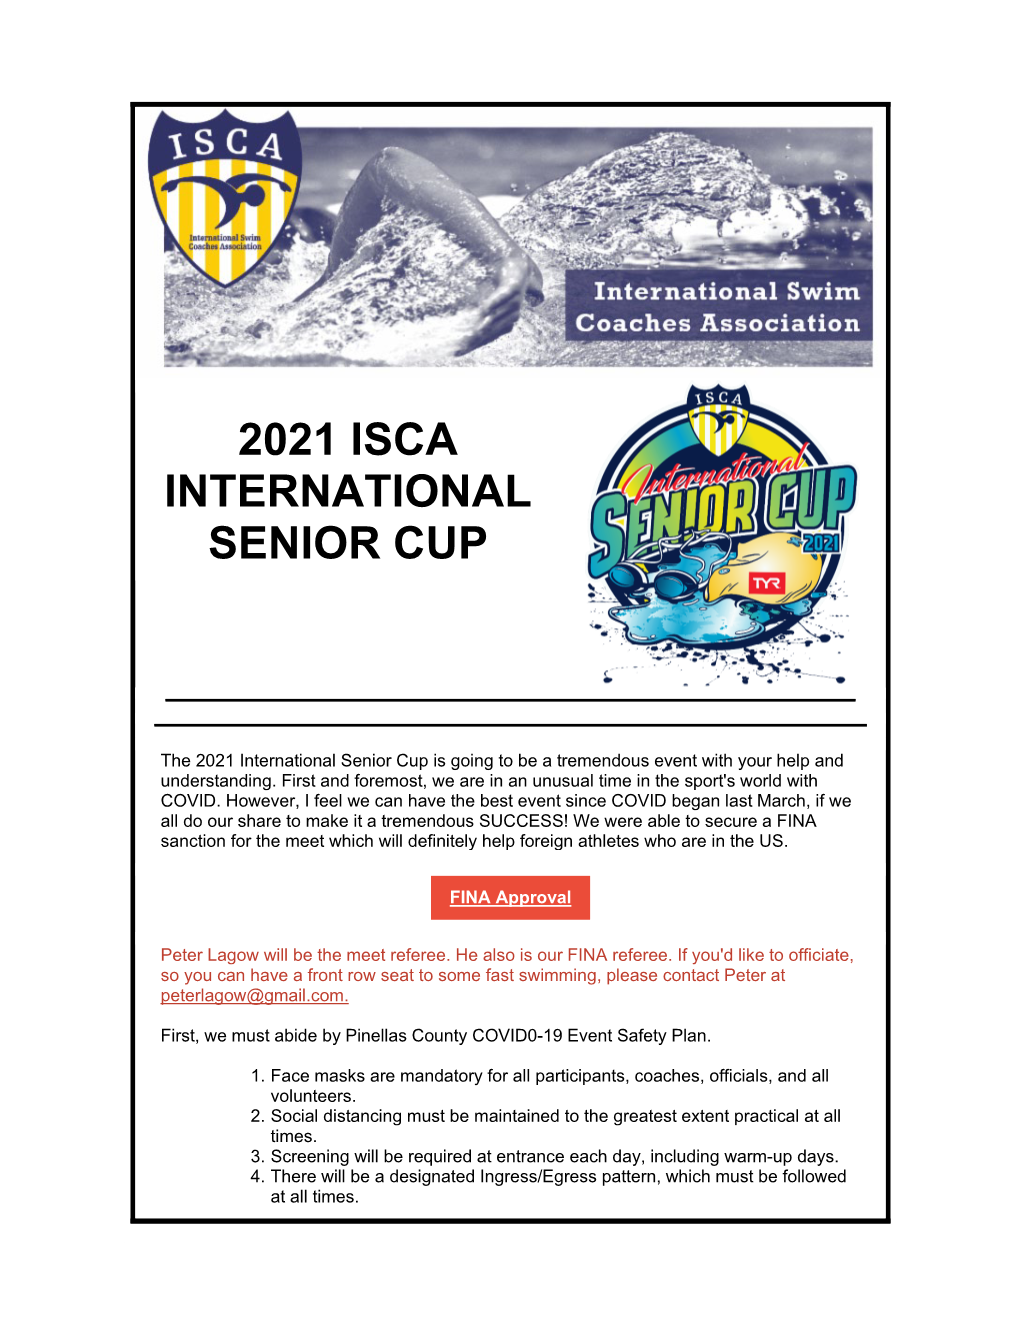 2021 Isca International Senior Cup